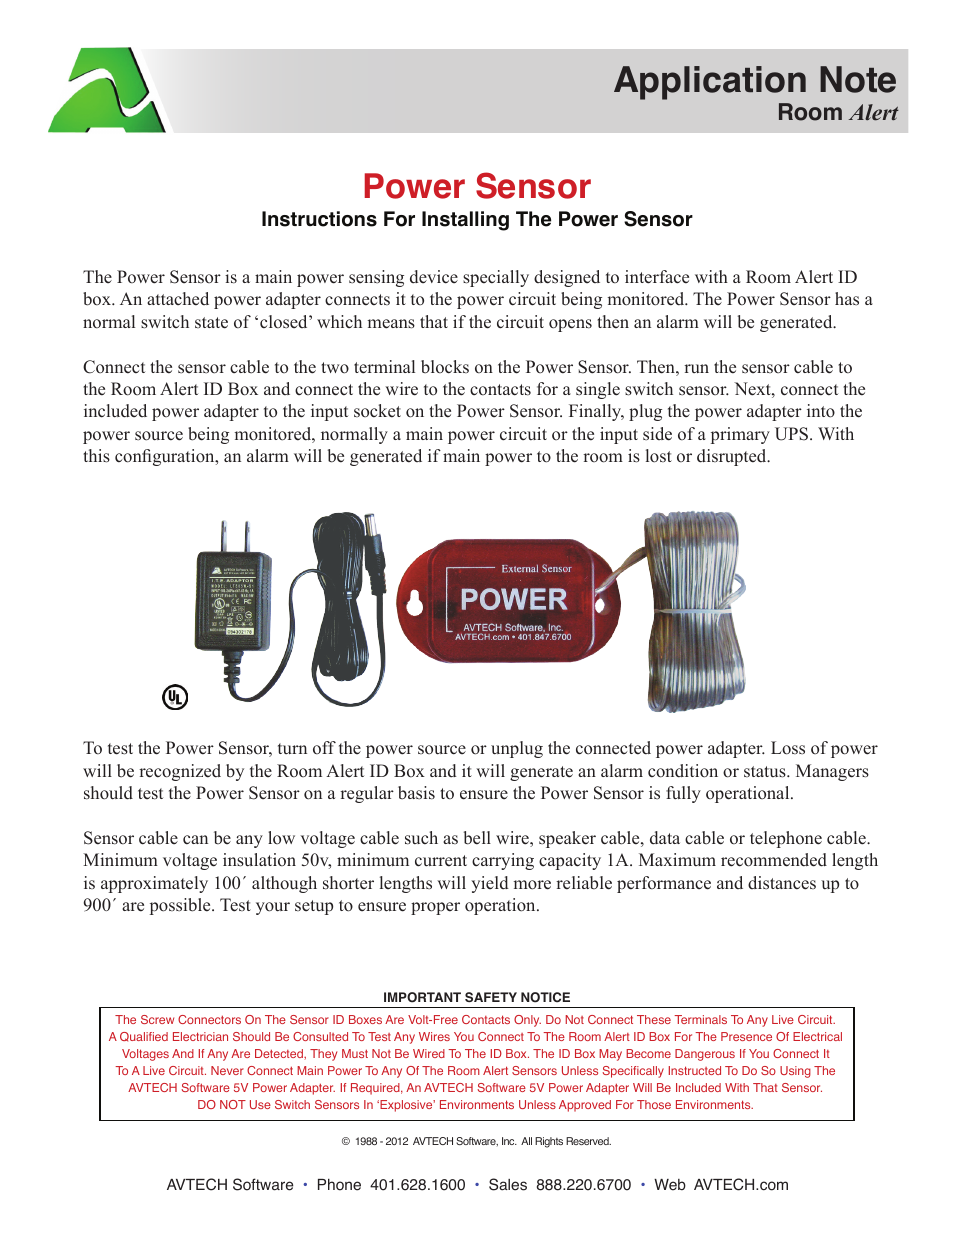 Power Sensor (RMA-PS1-SEN)